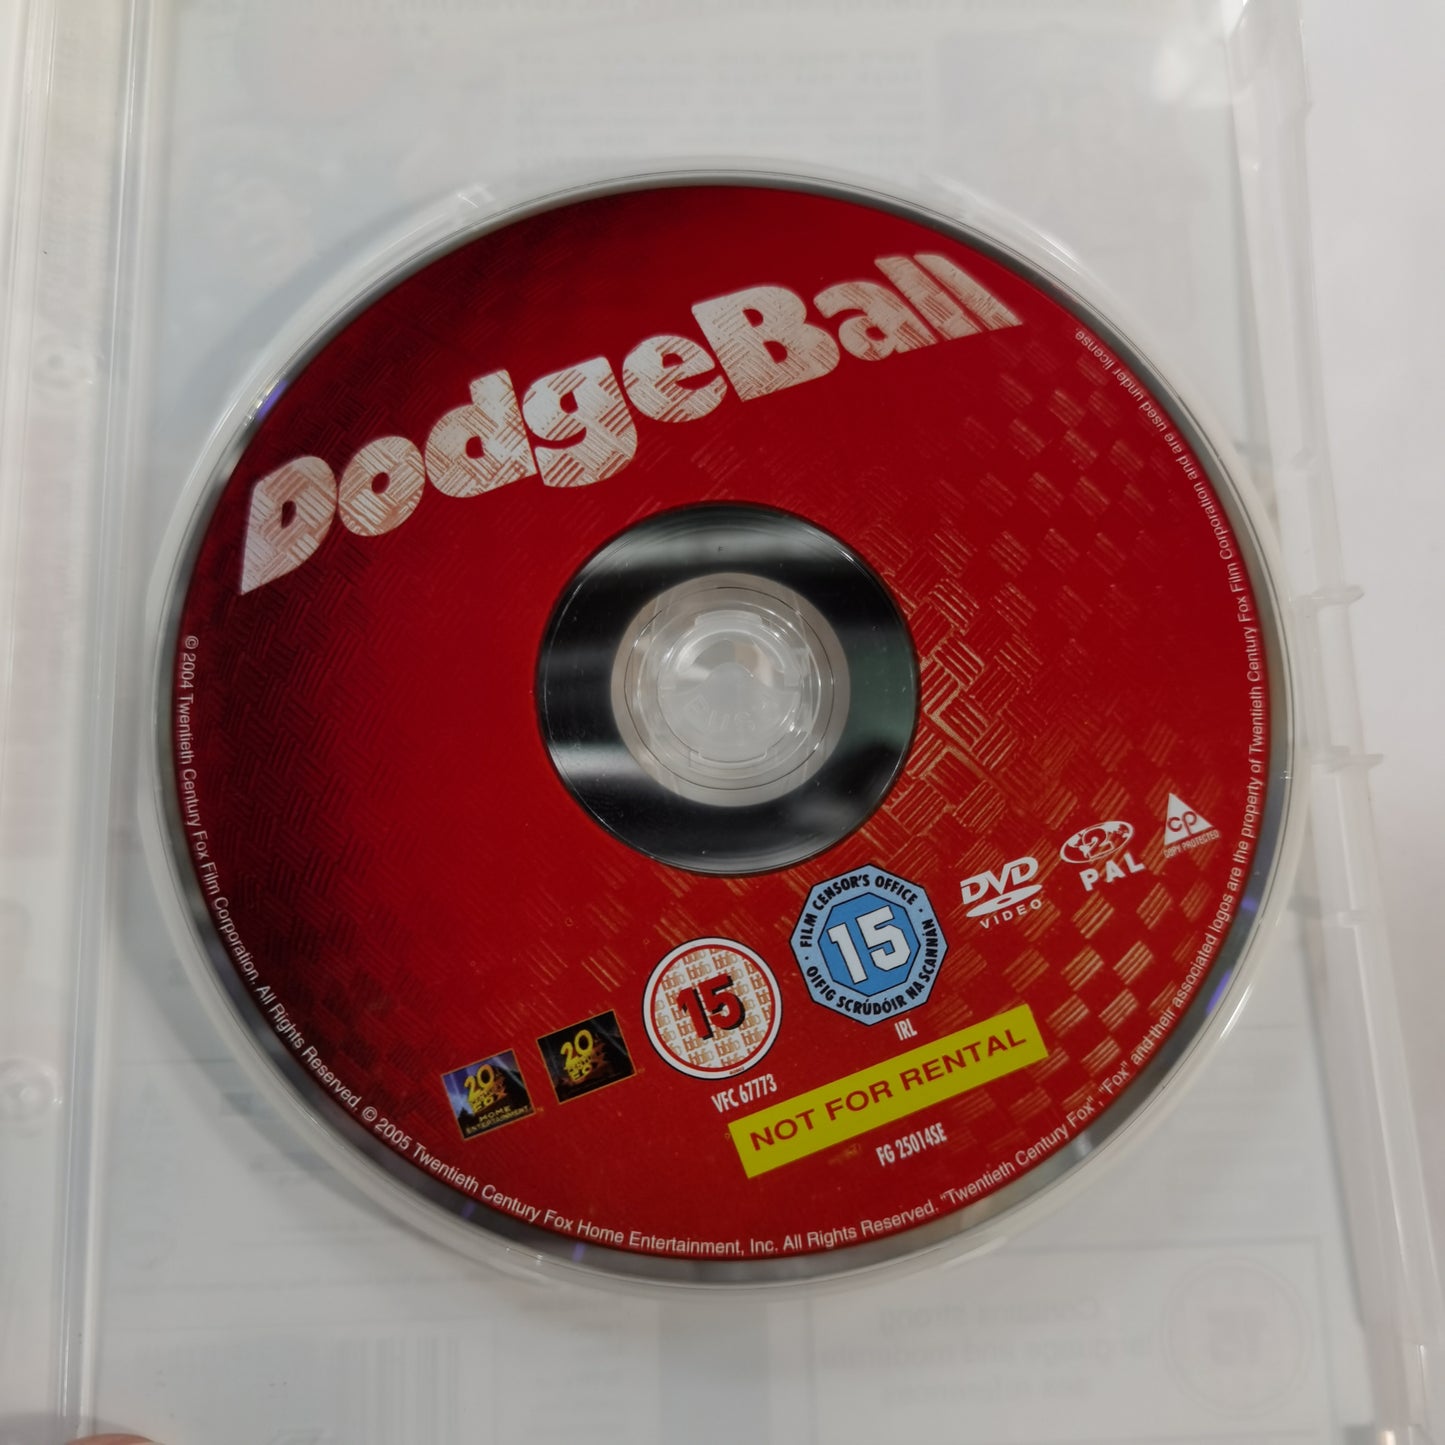 Dodgeball: A True Underdog Story (2004) - DVD UK 2005 Extreme Edition